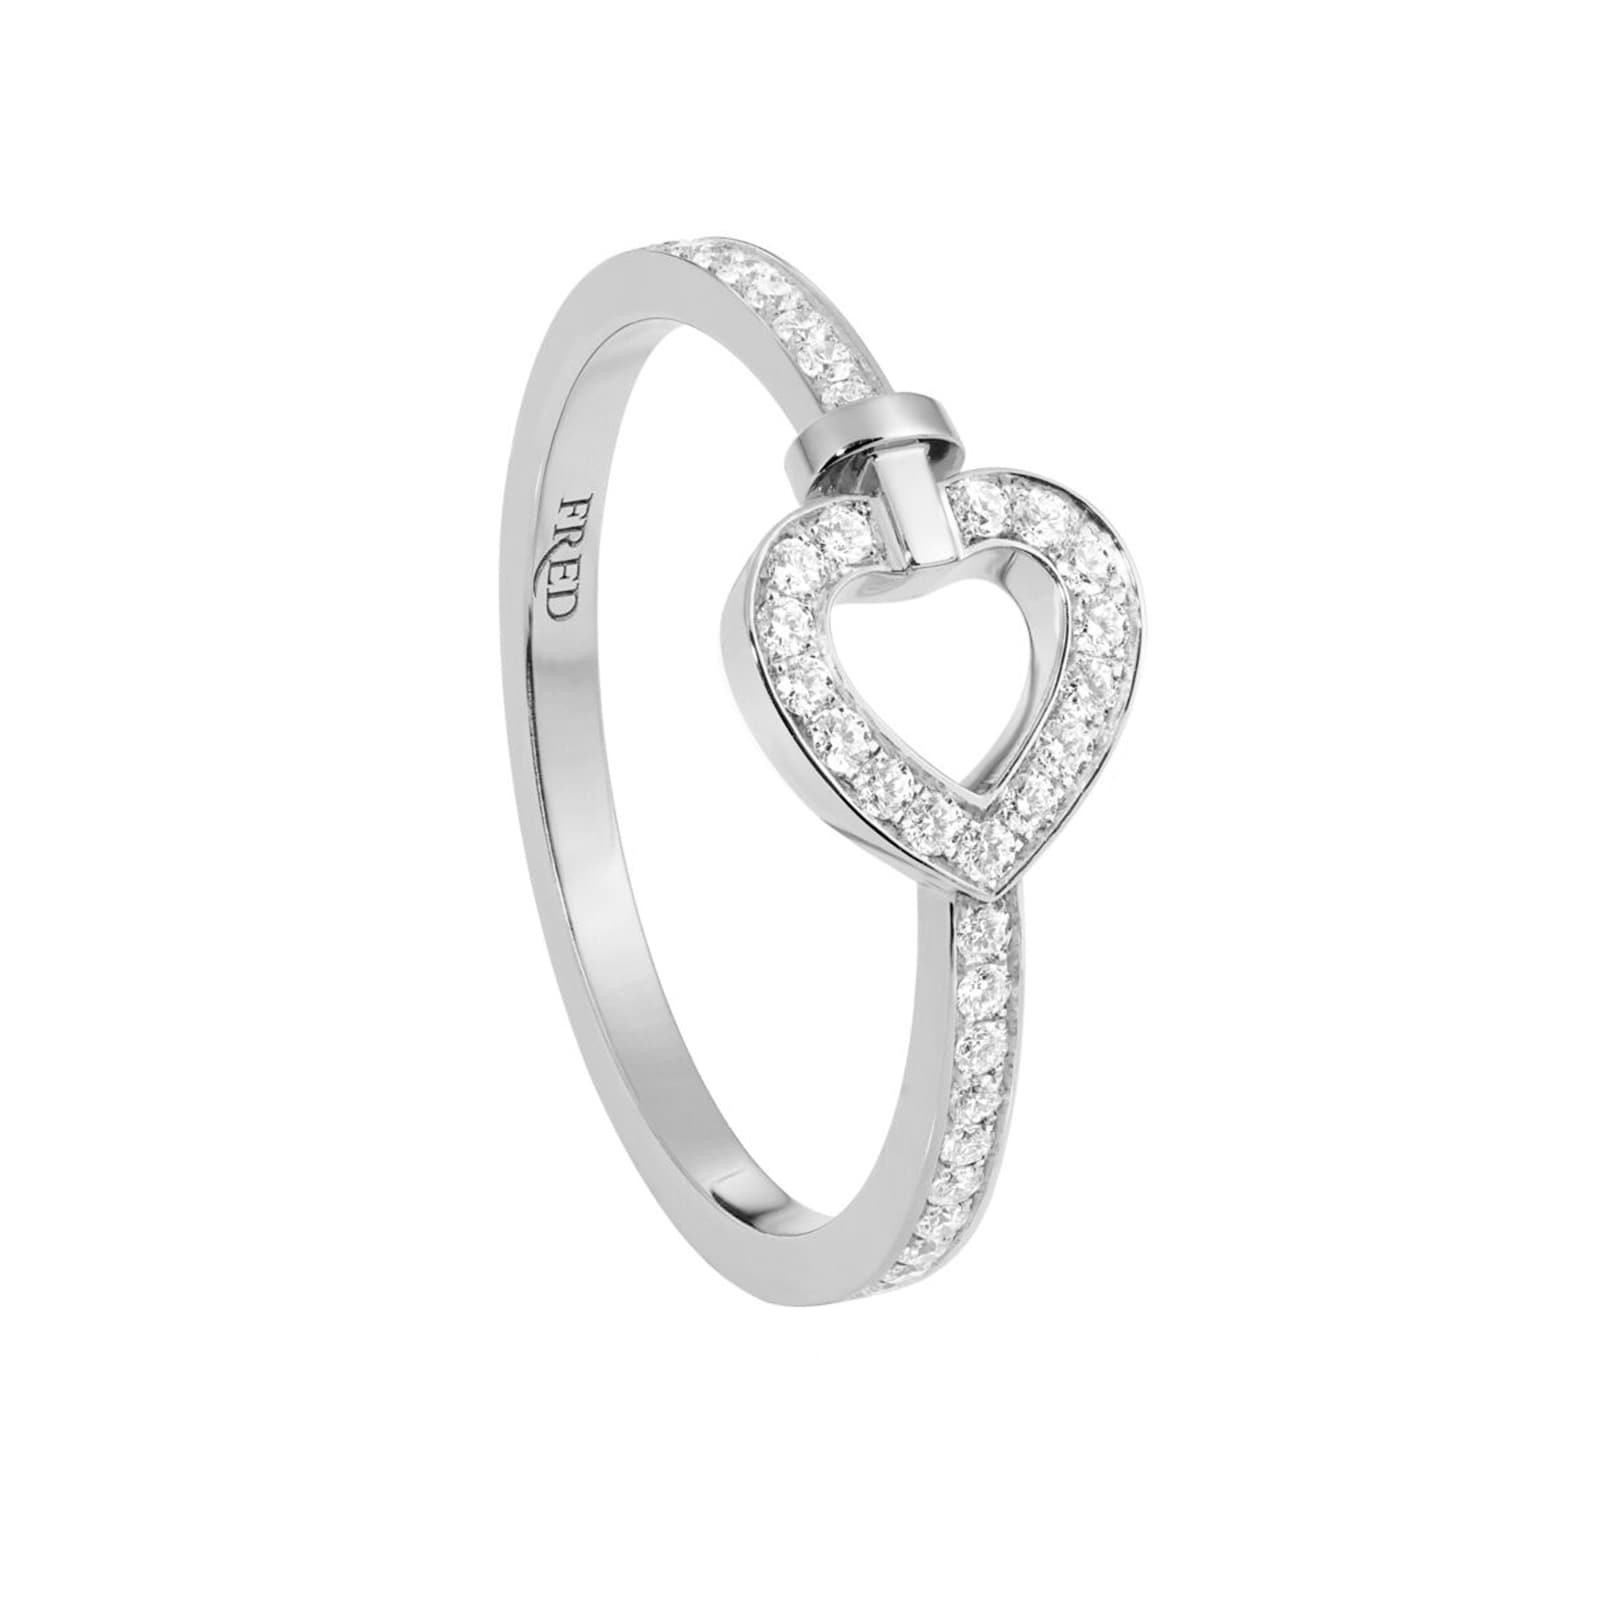 Pretty Woman 18ct White Gold 0.21ct Diamond Ring - Ring Size L